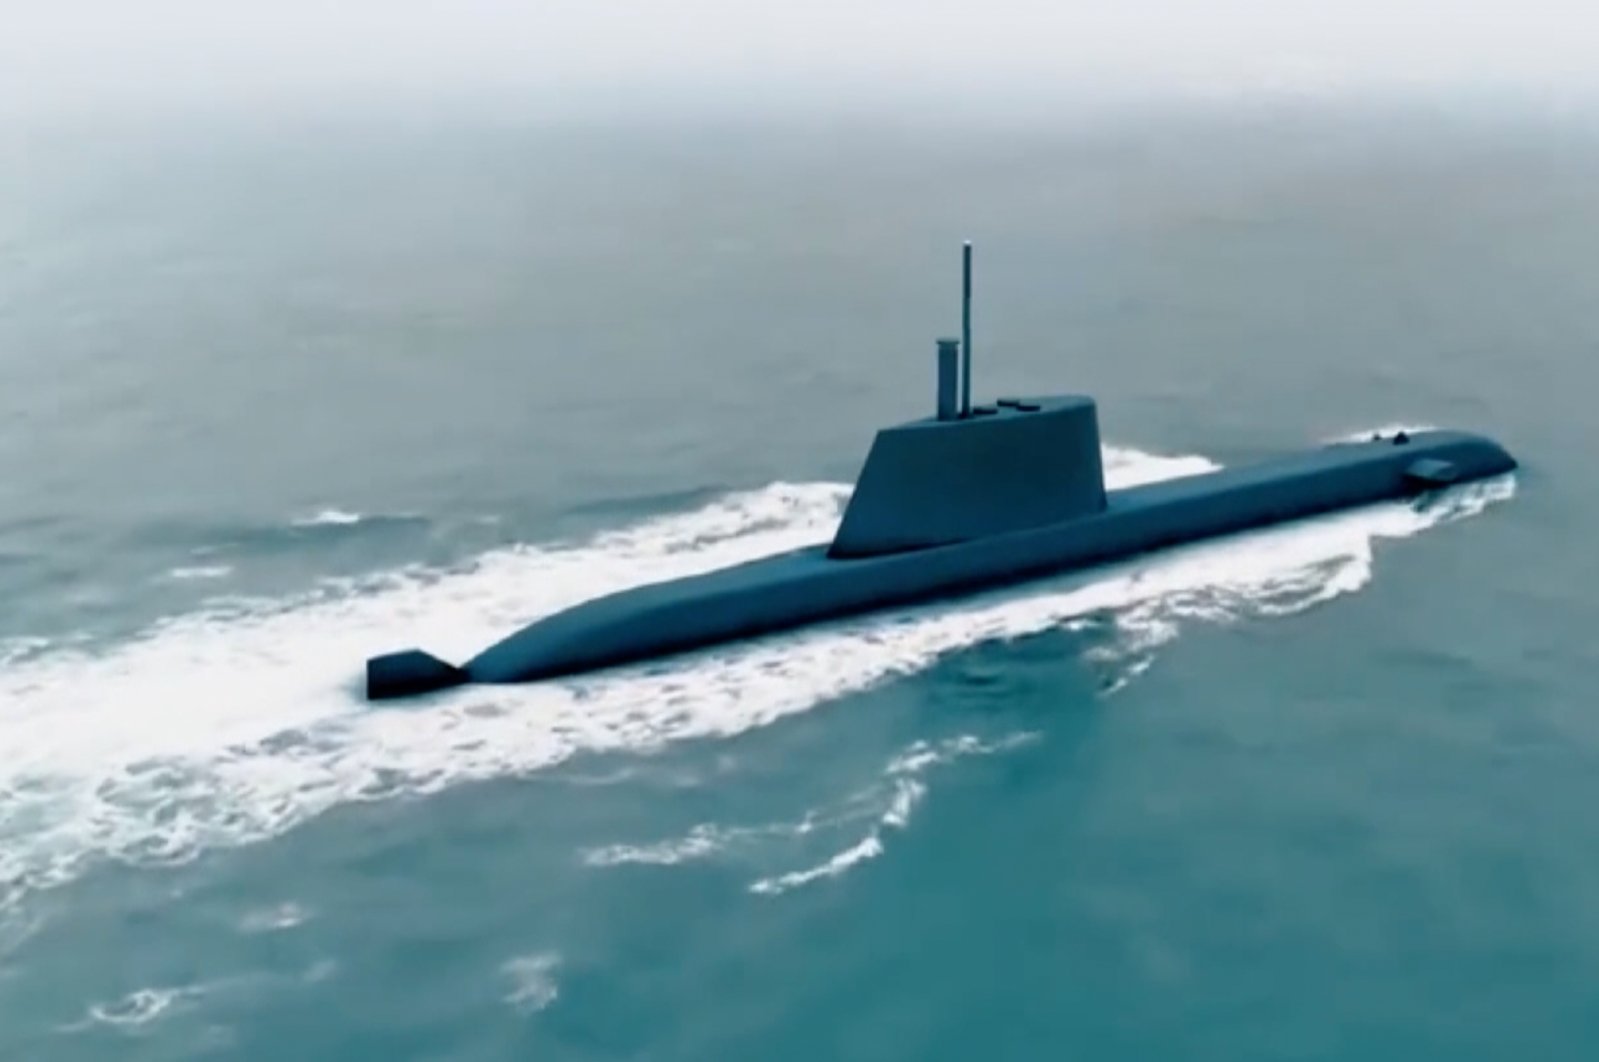 Turki memulai pengembangan kapal selam serang domestik berukuran kecil